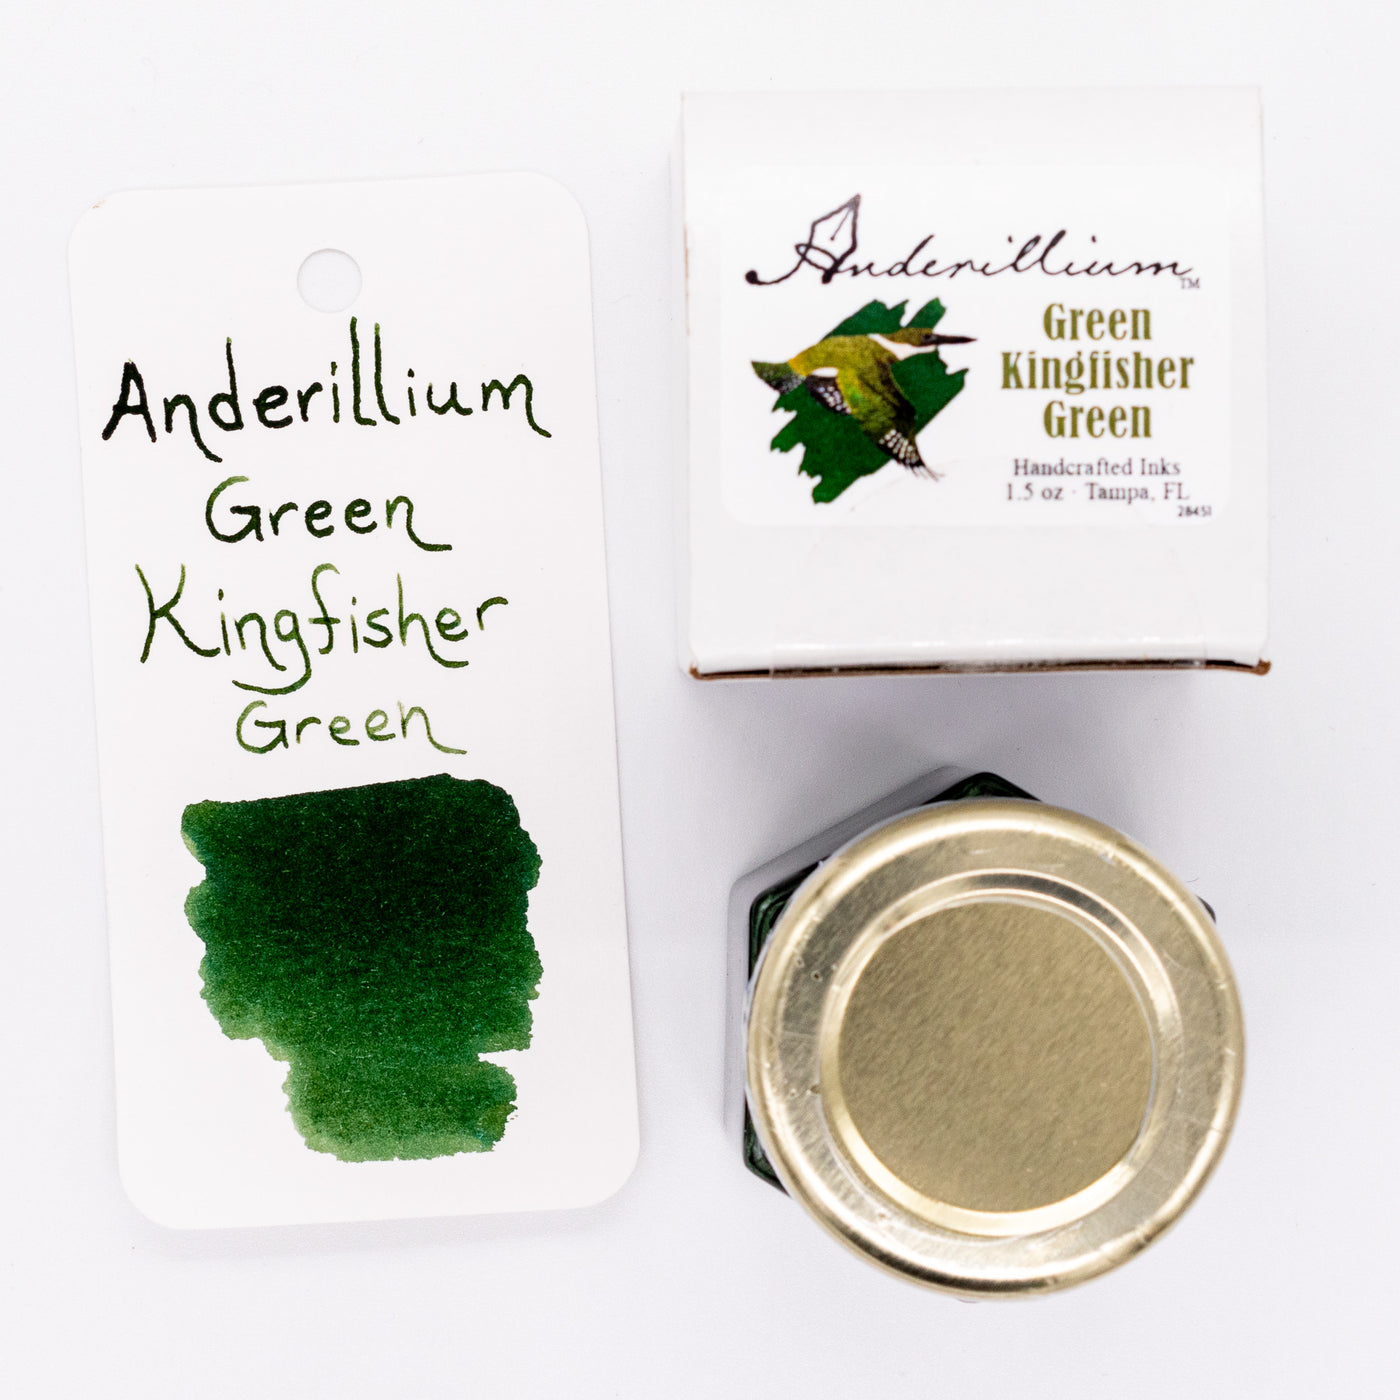 Anderillium Green Kingfisher Green Ink Bottle 1.5oz glass